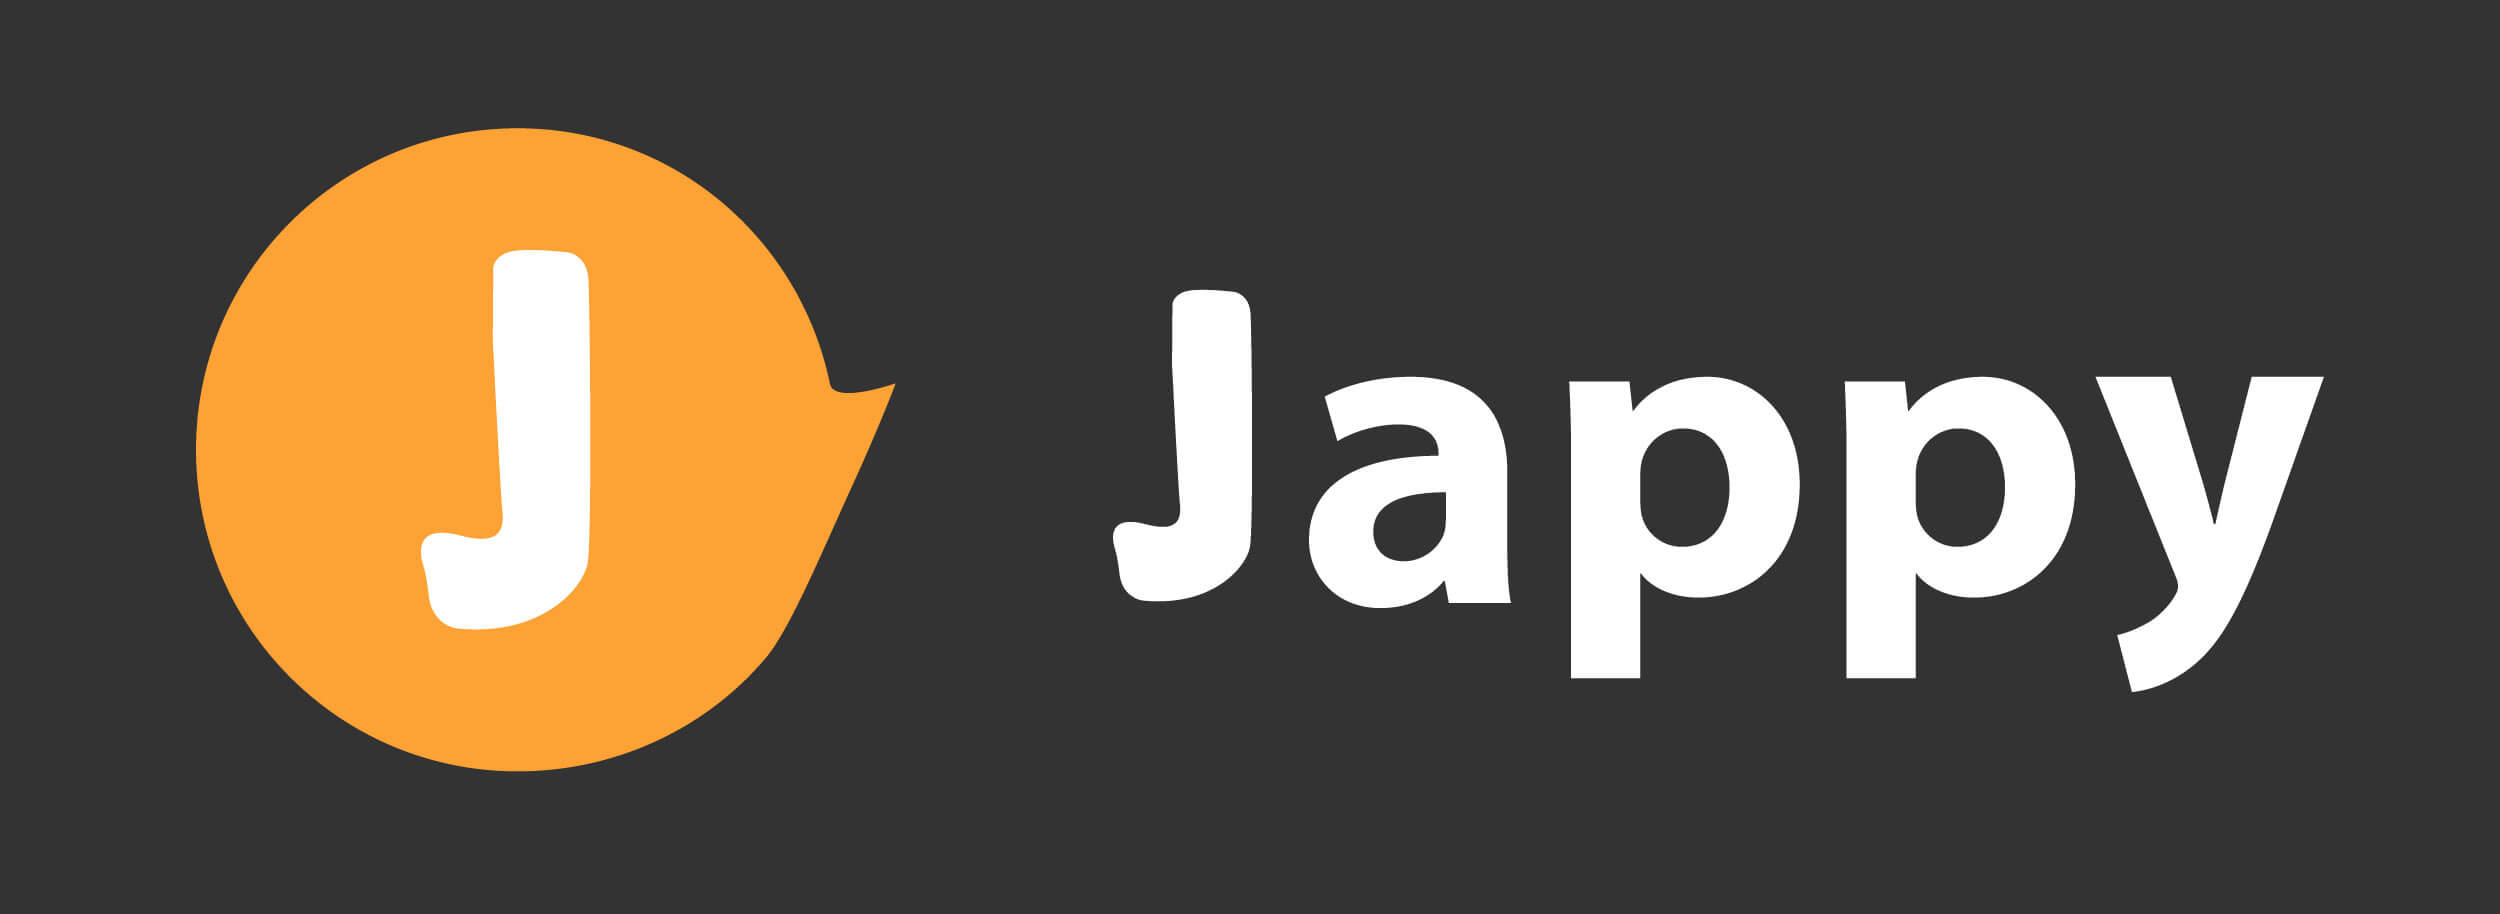 Partnervermittlung jappy